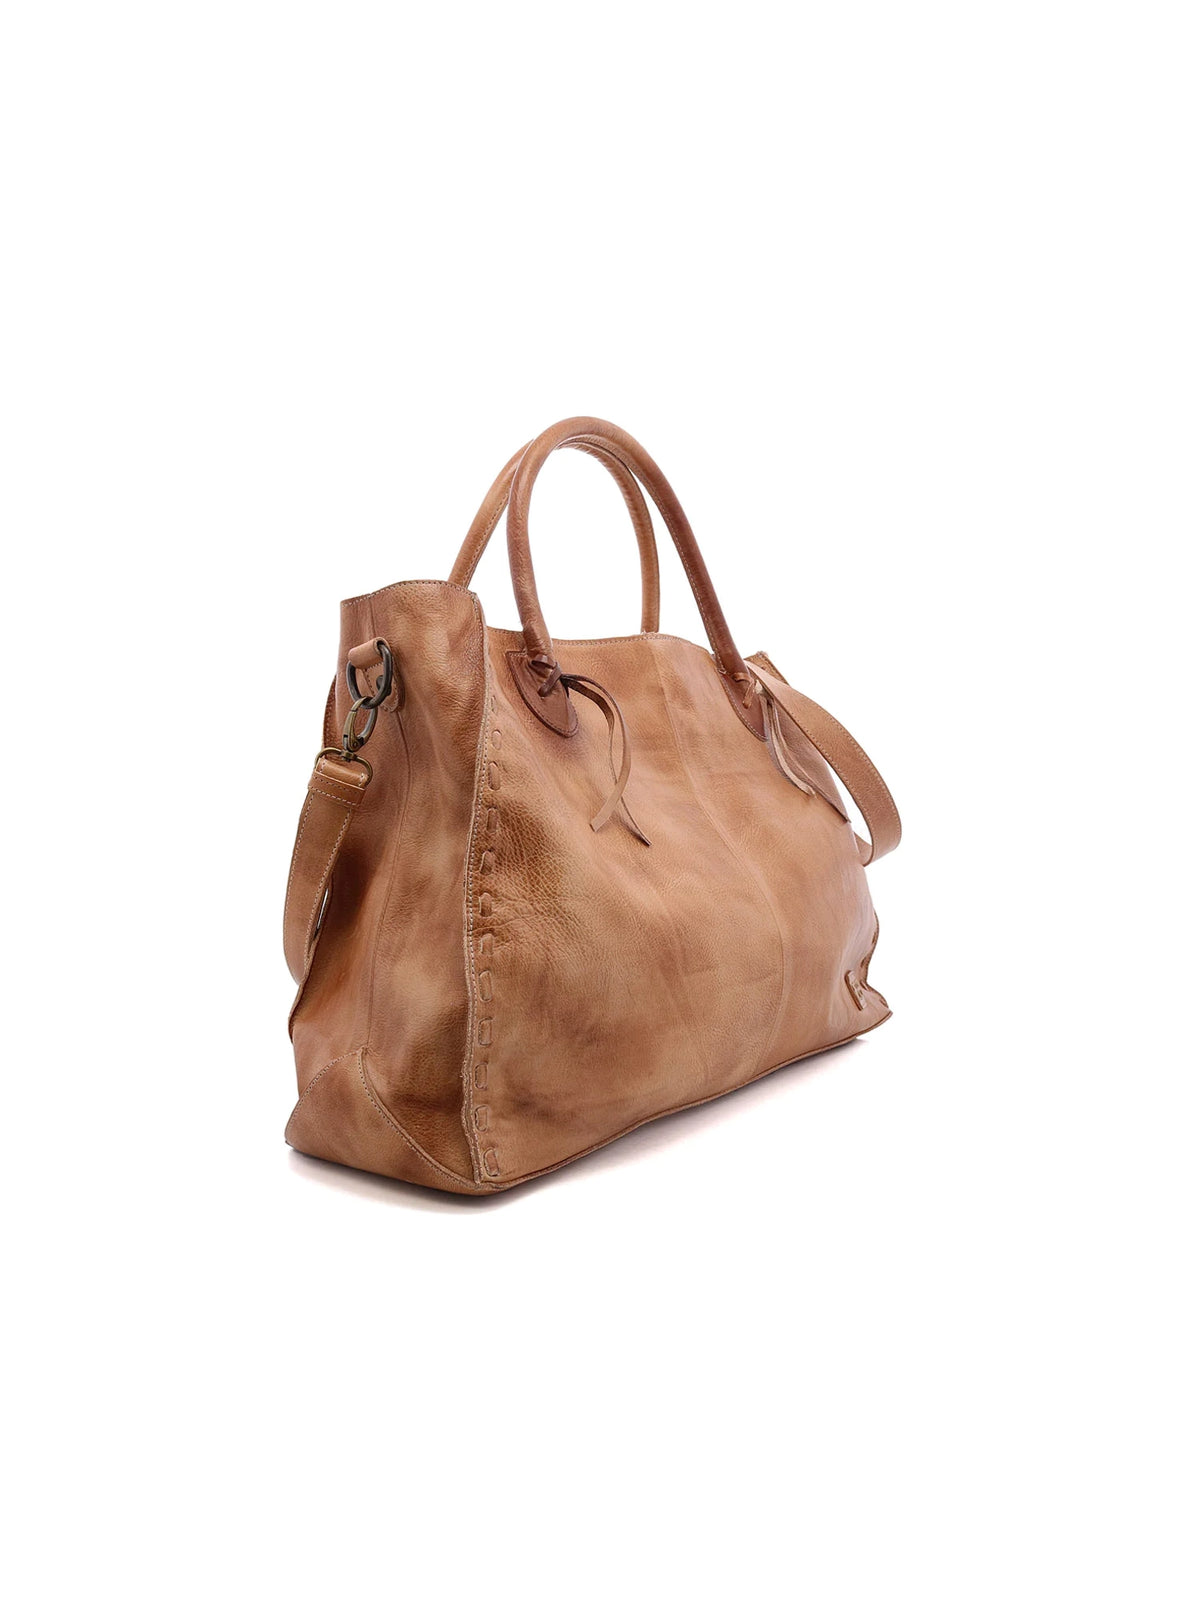 bedstu rockaway handbag in tan rustic